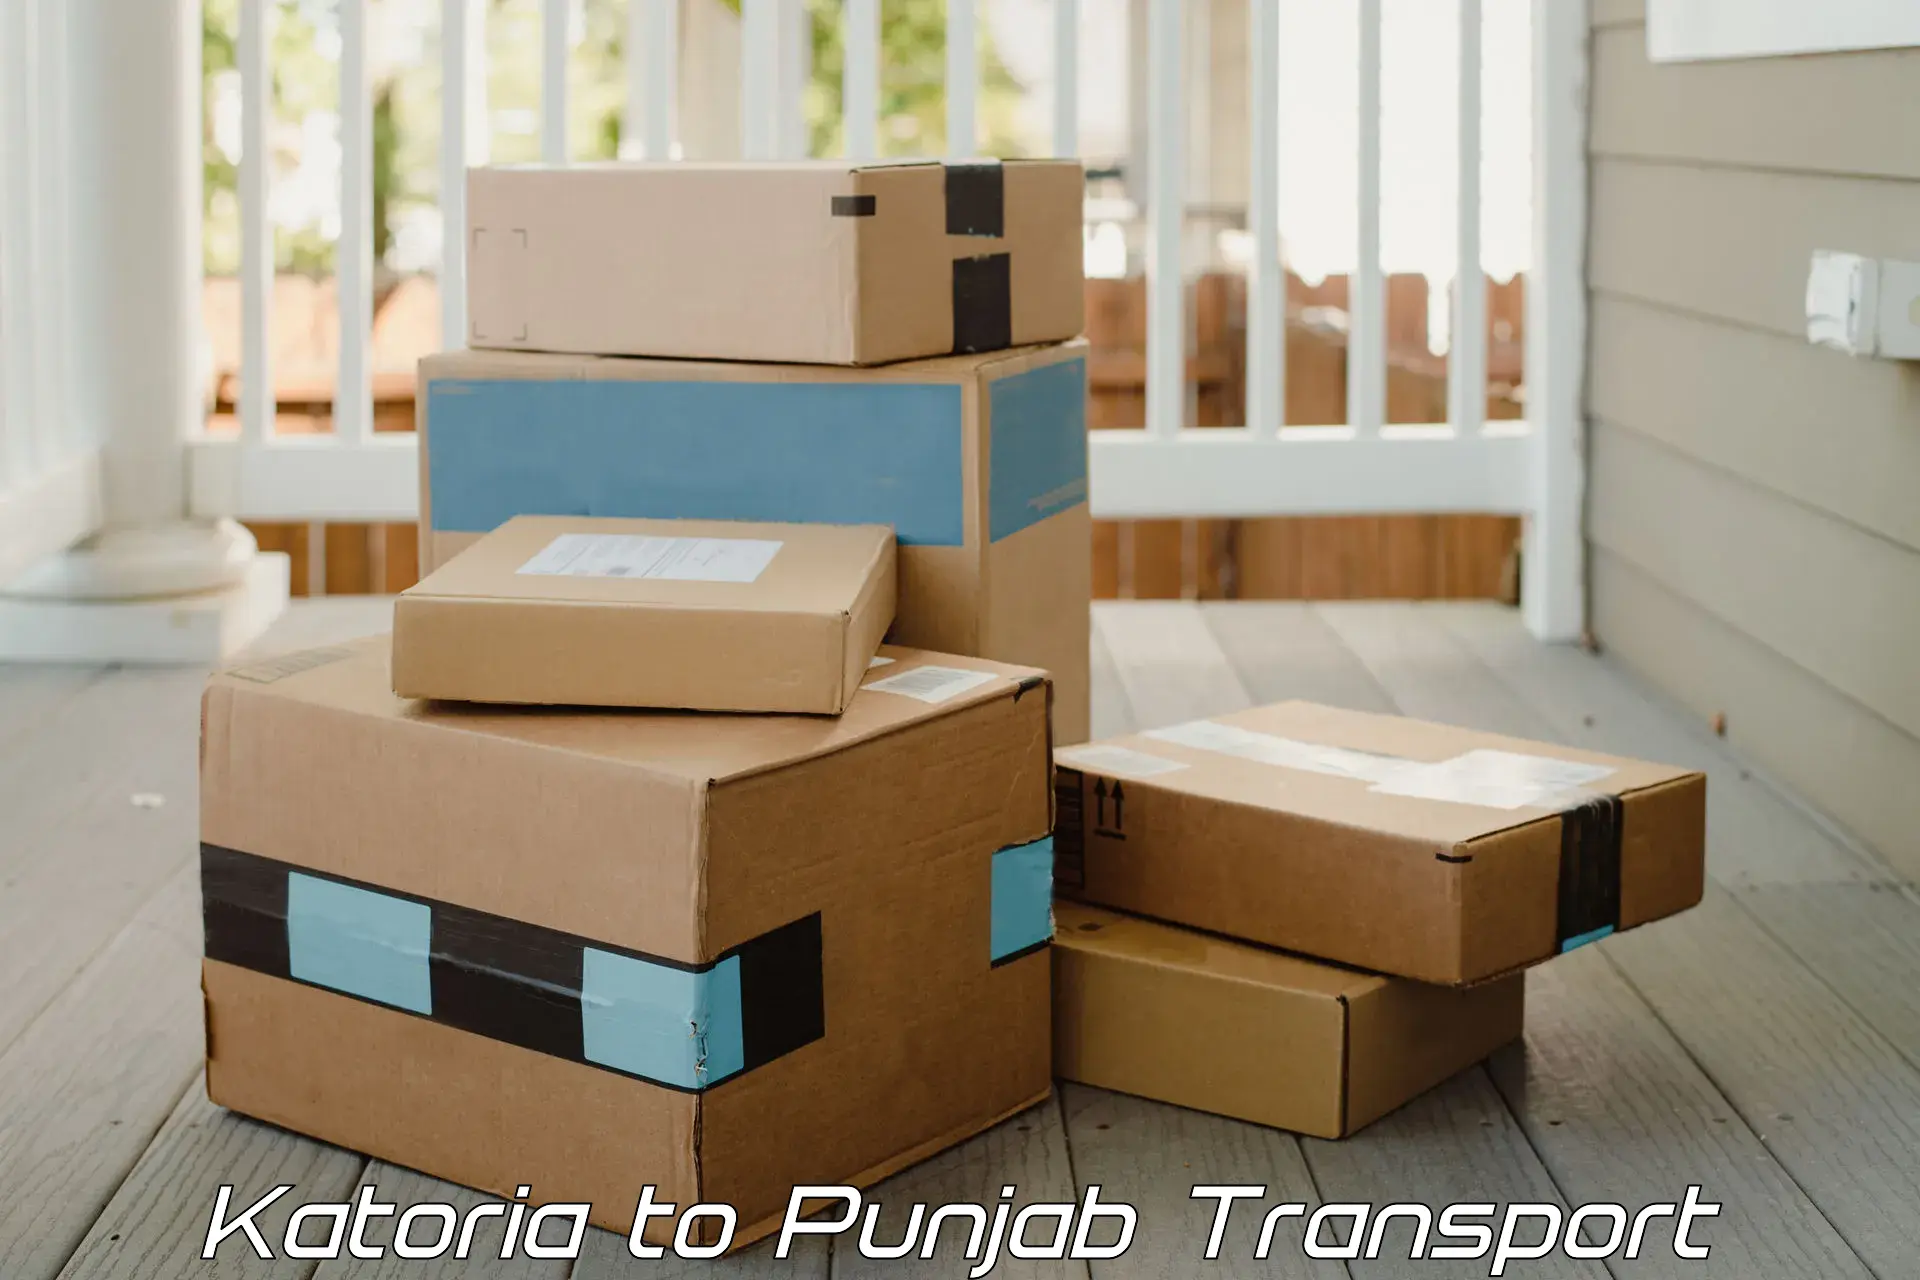 Vehicle transport services Katoria to Punjab